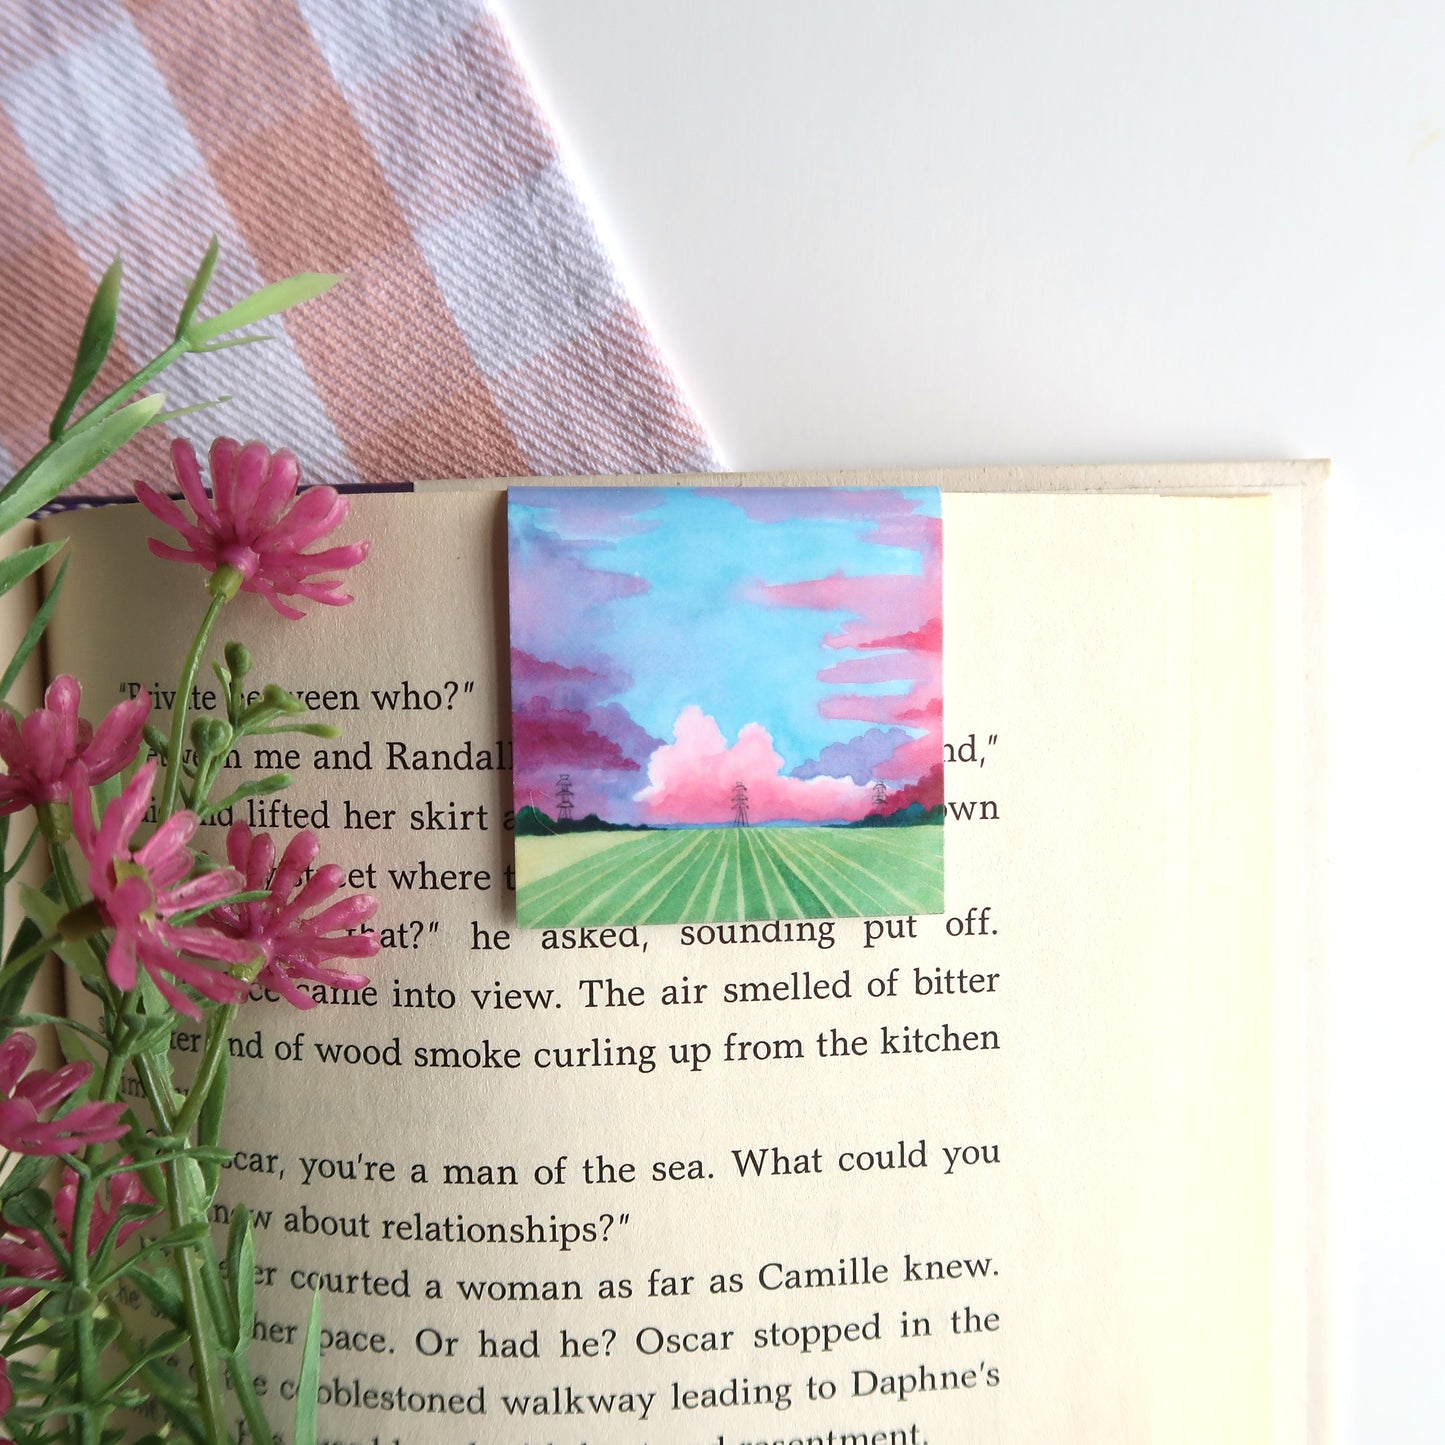 Pastel Cornfields - Magnetic Bookmark